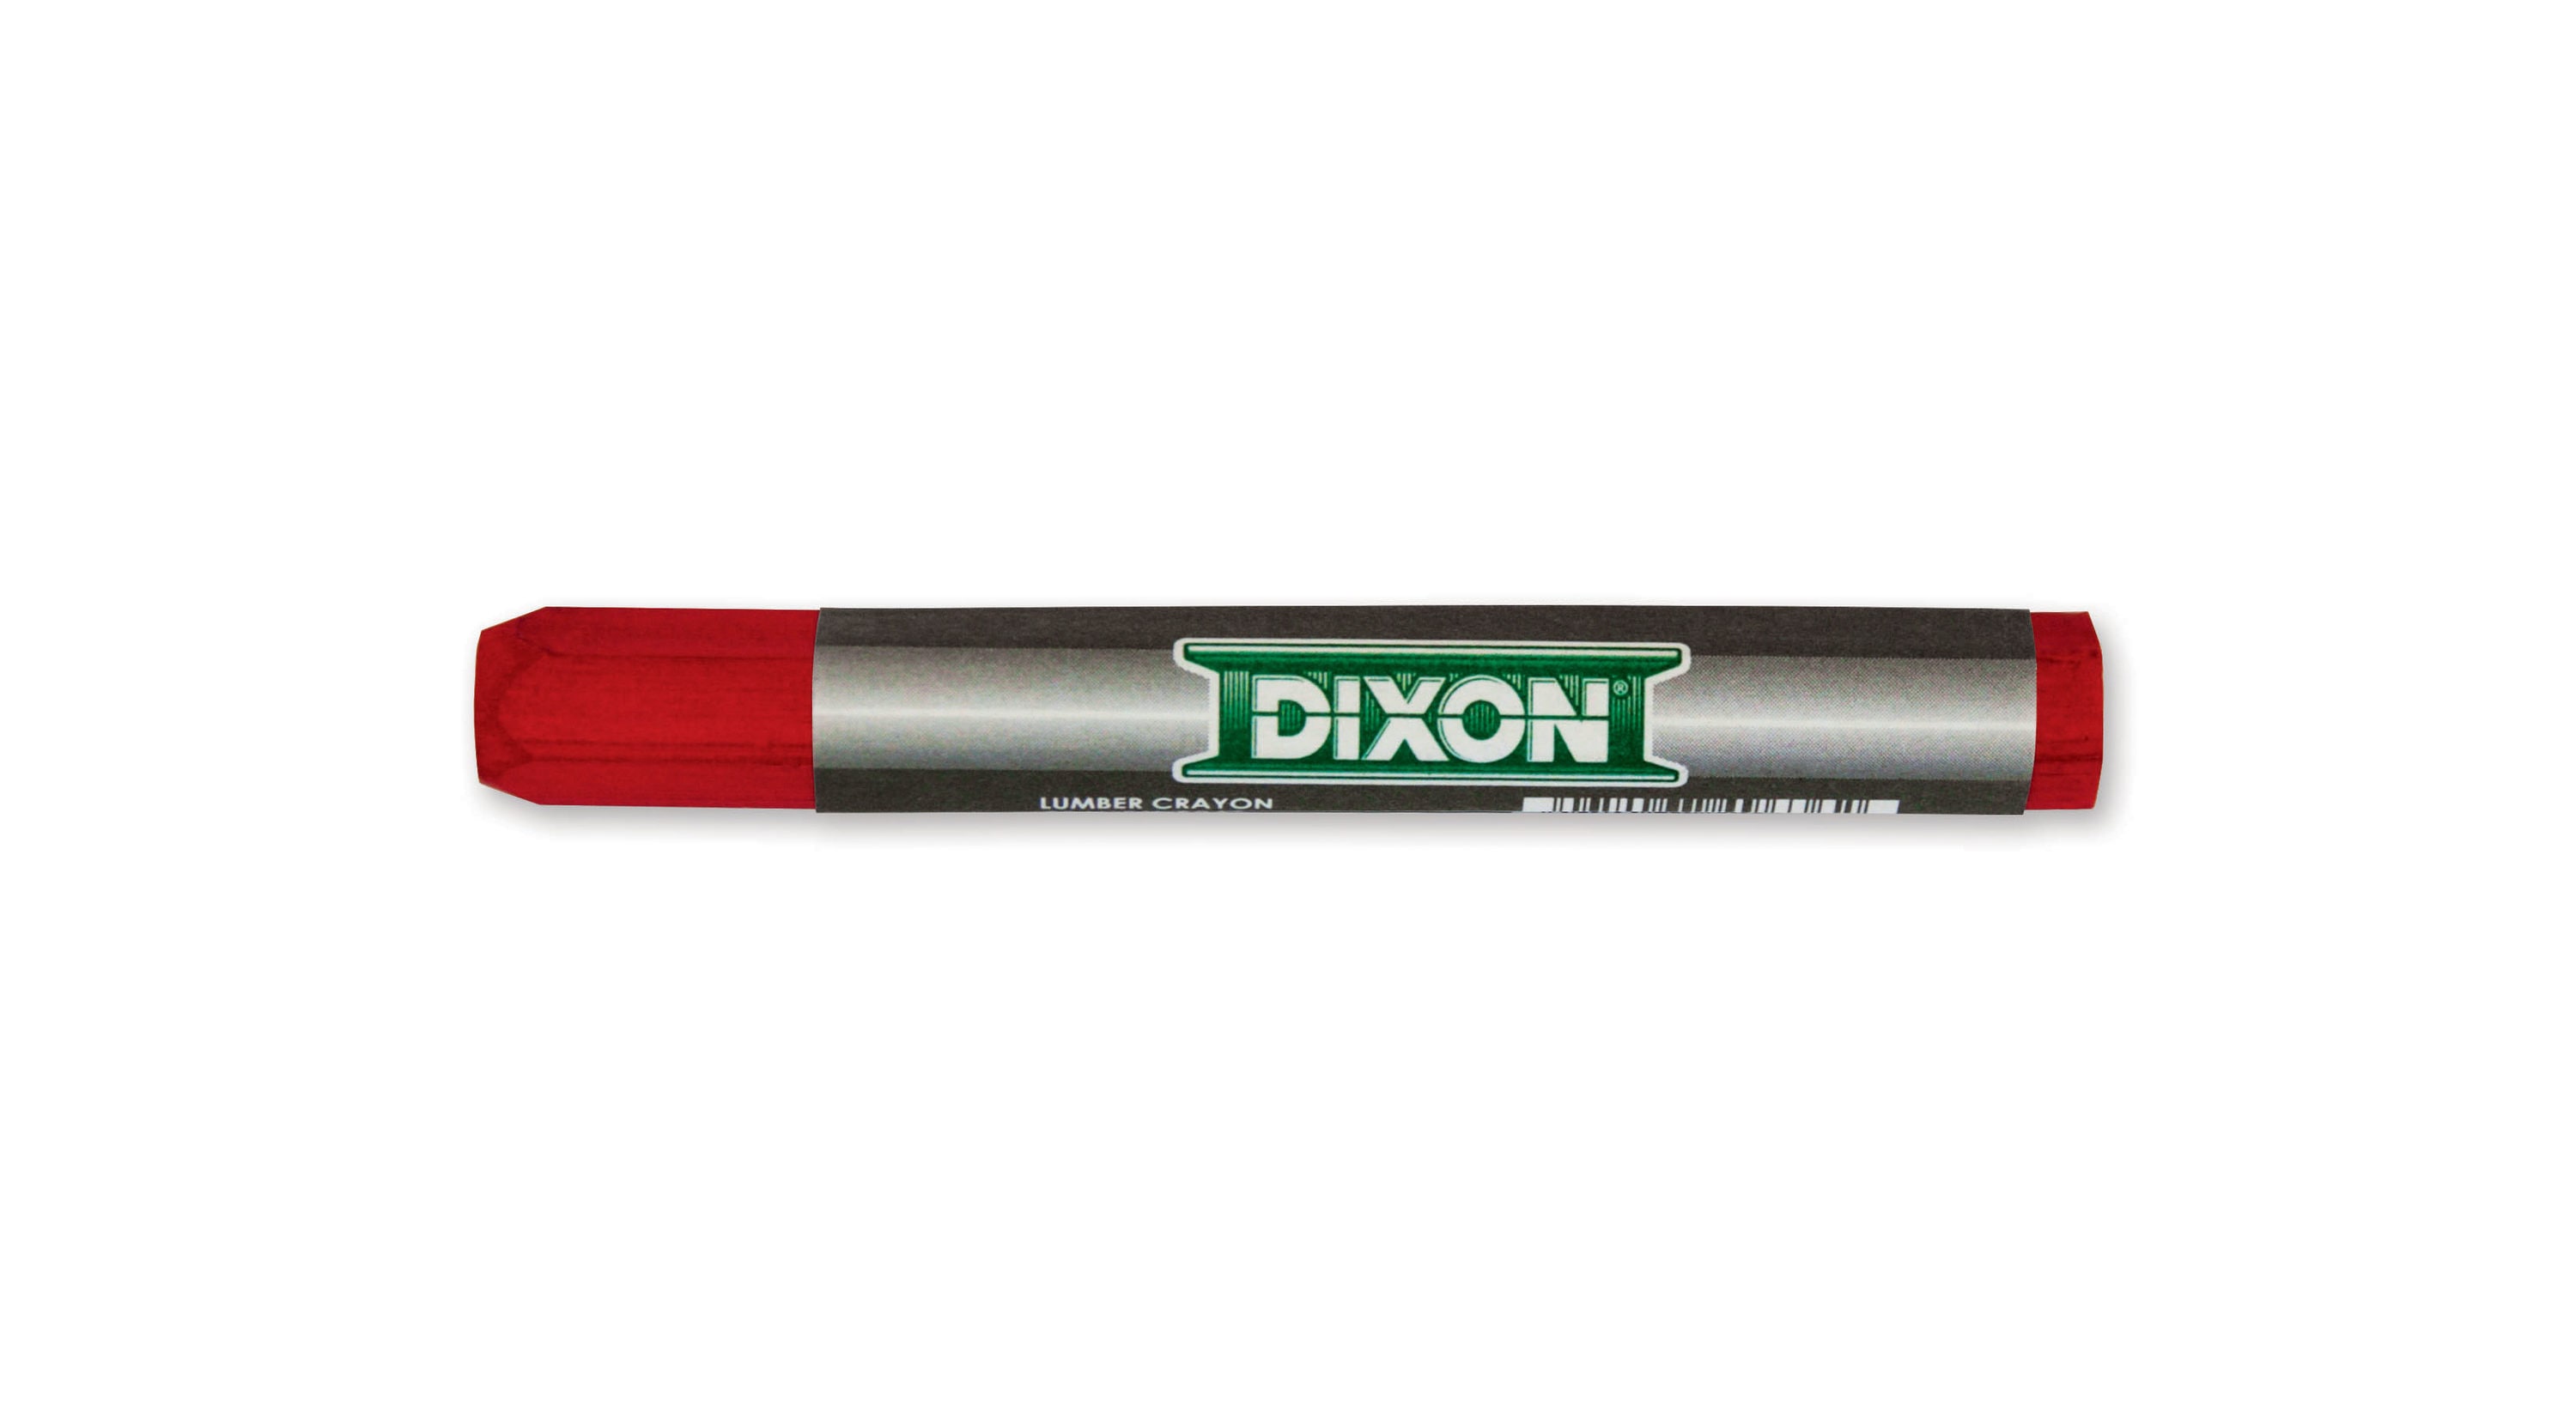 DIXON® DRY ERAS WHITEBOARD MARKER, 12 PACK - Multi access office